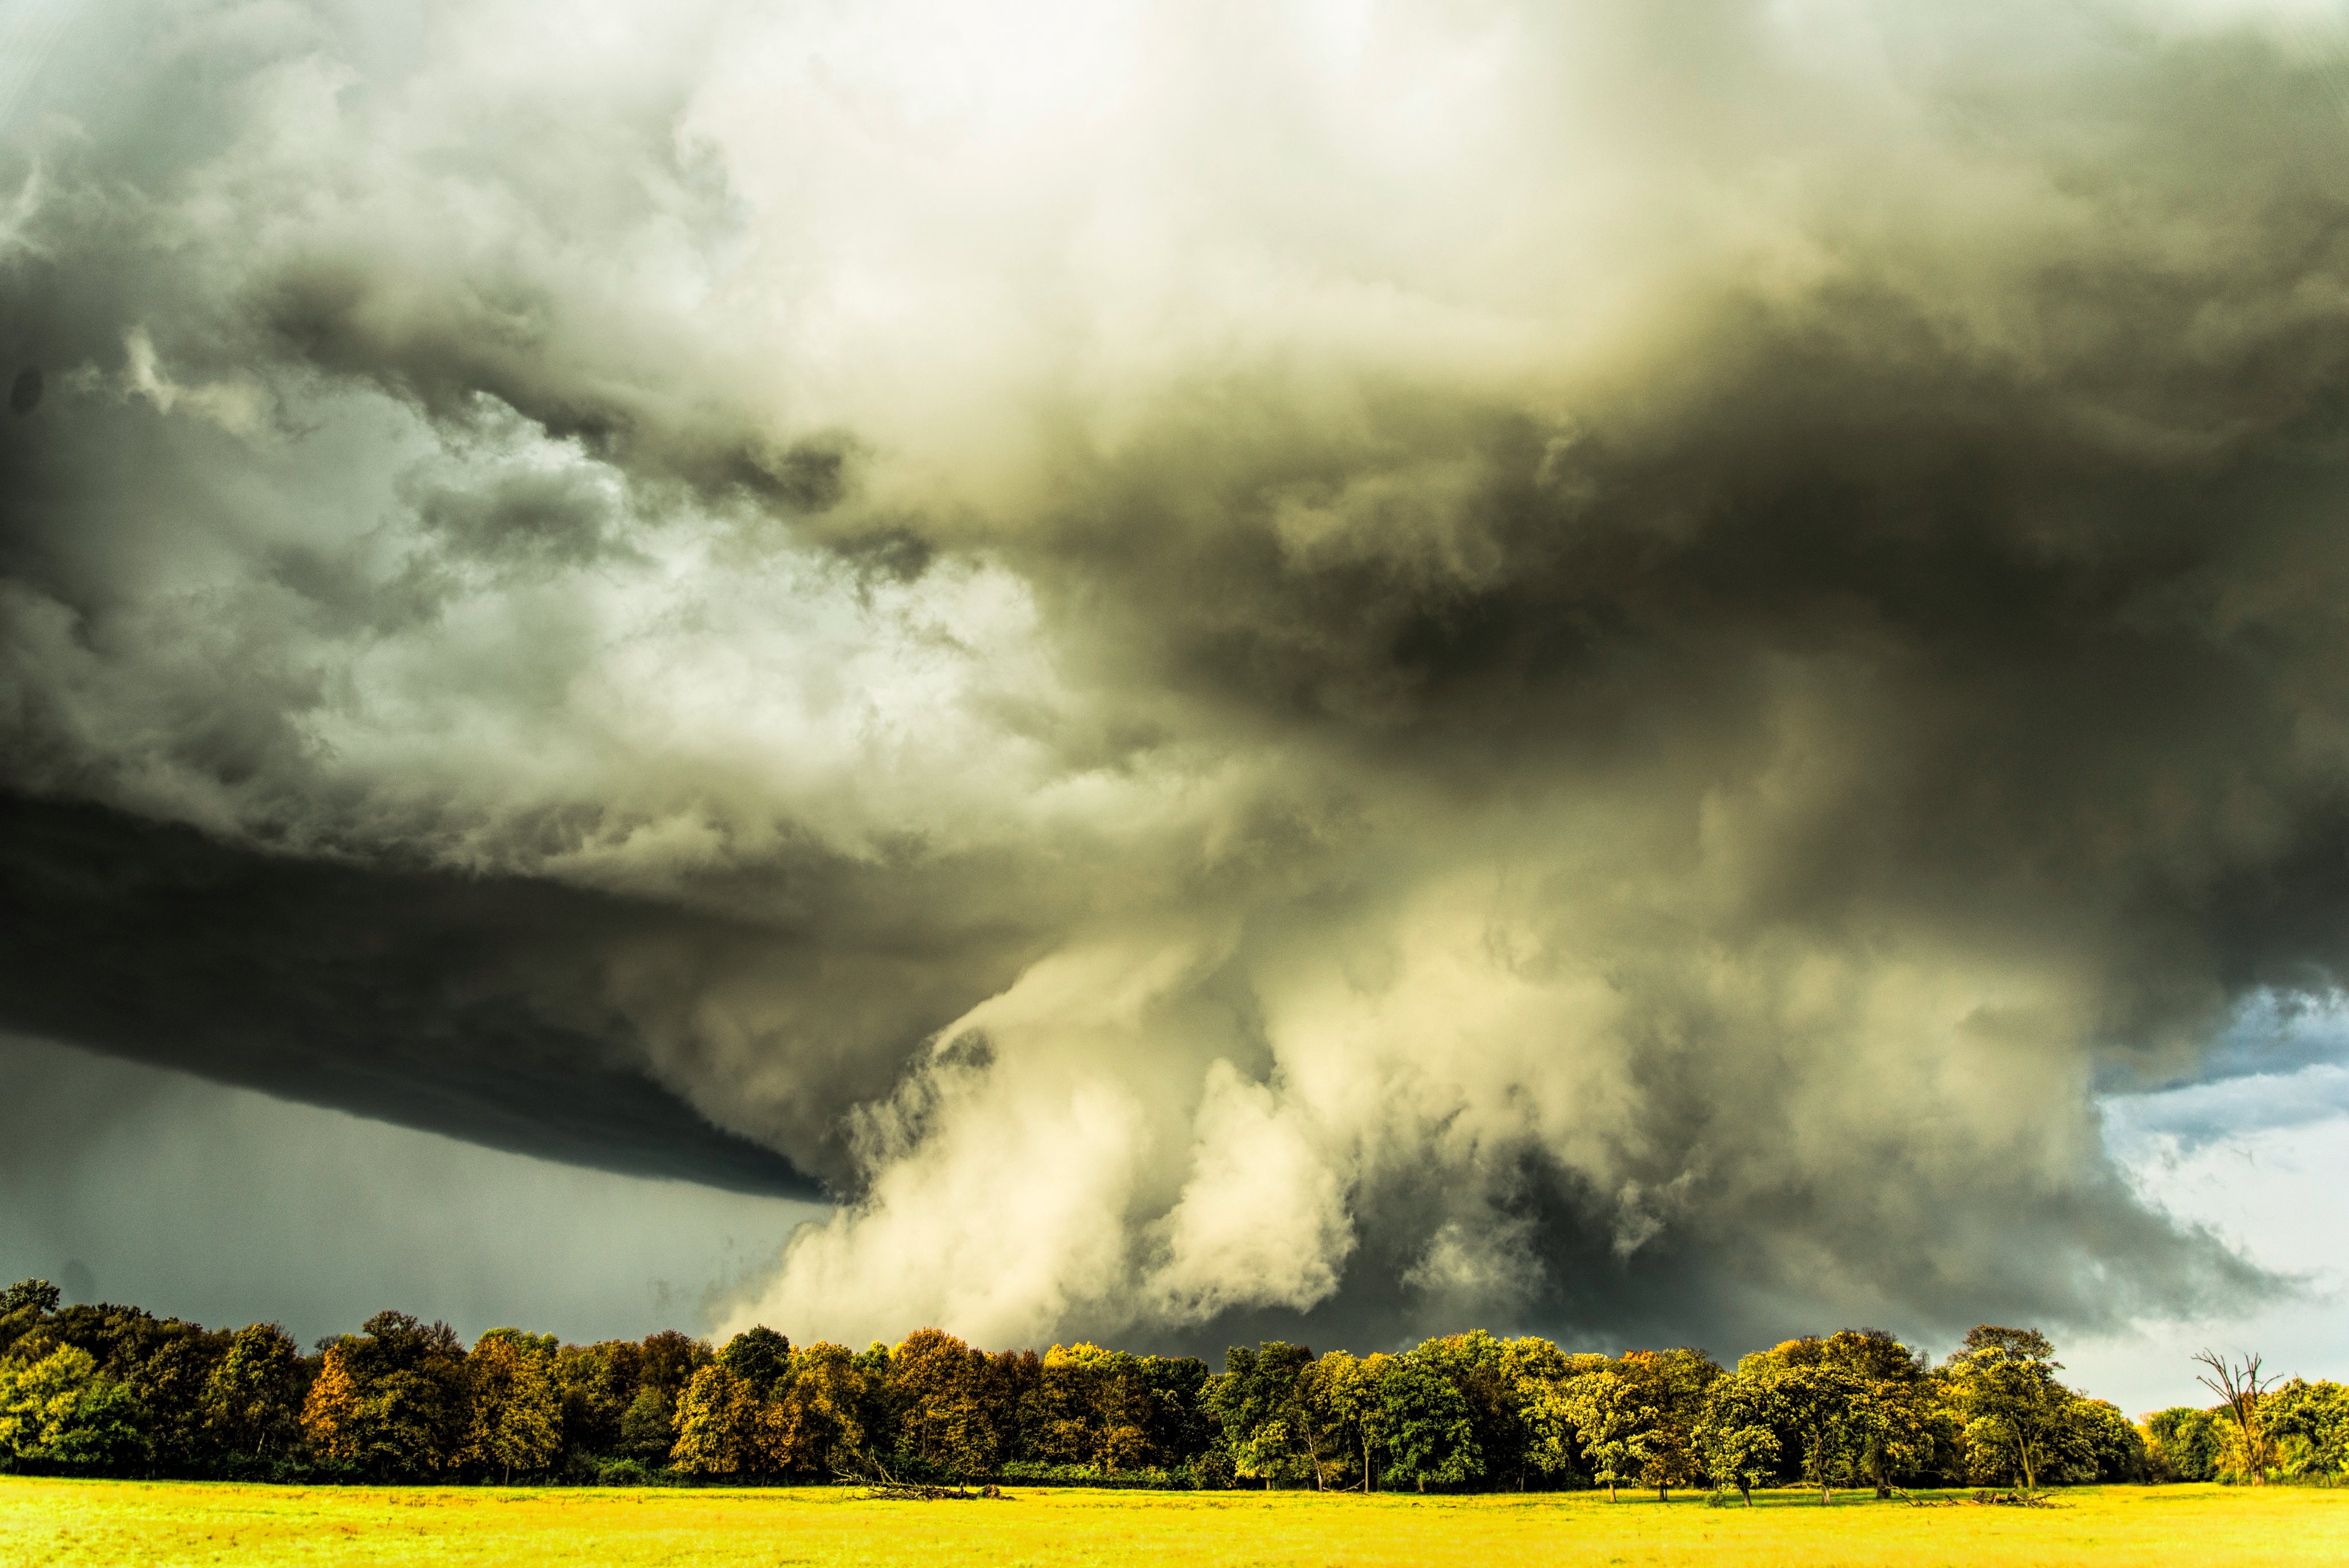 Supercell thunderstorm outside Cedar Rapids, IA Ethan Schisler @StormOptics